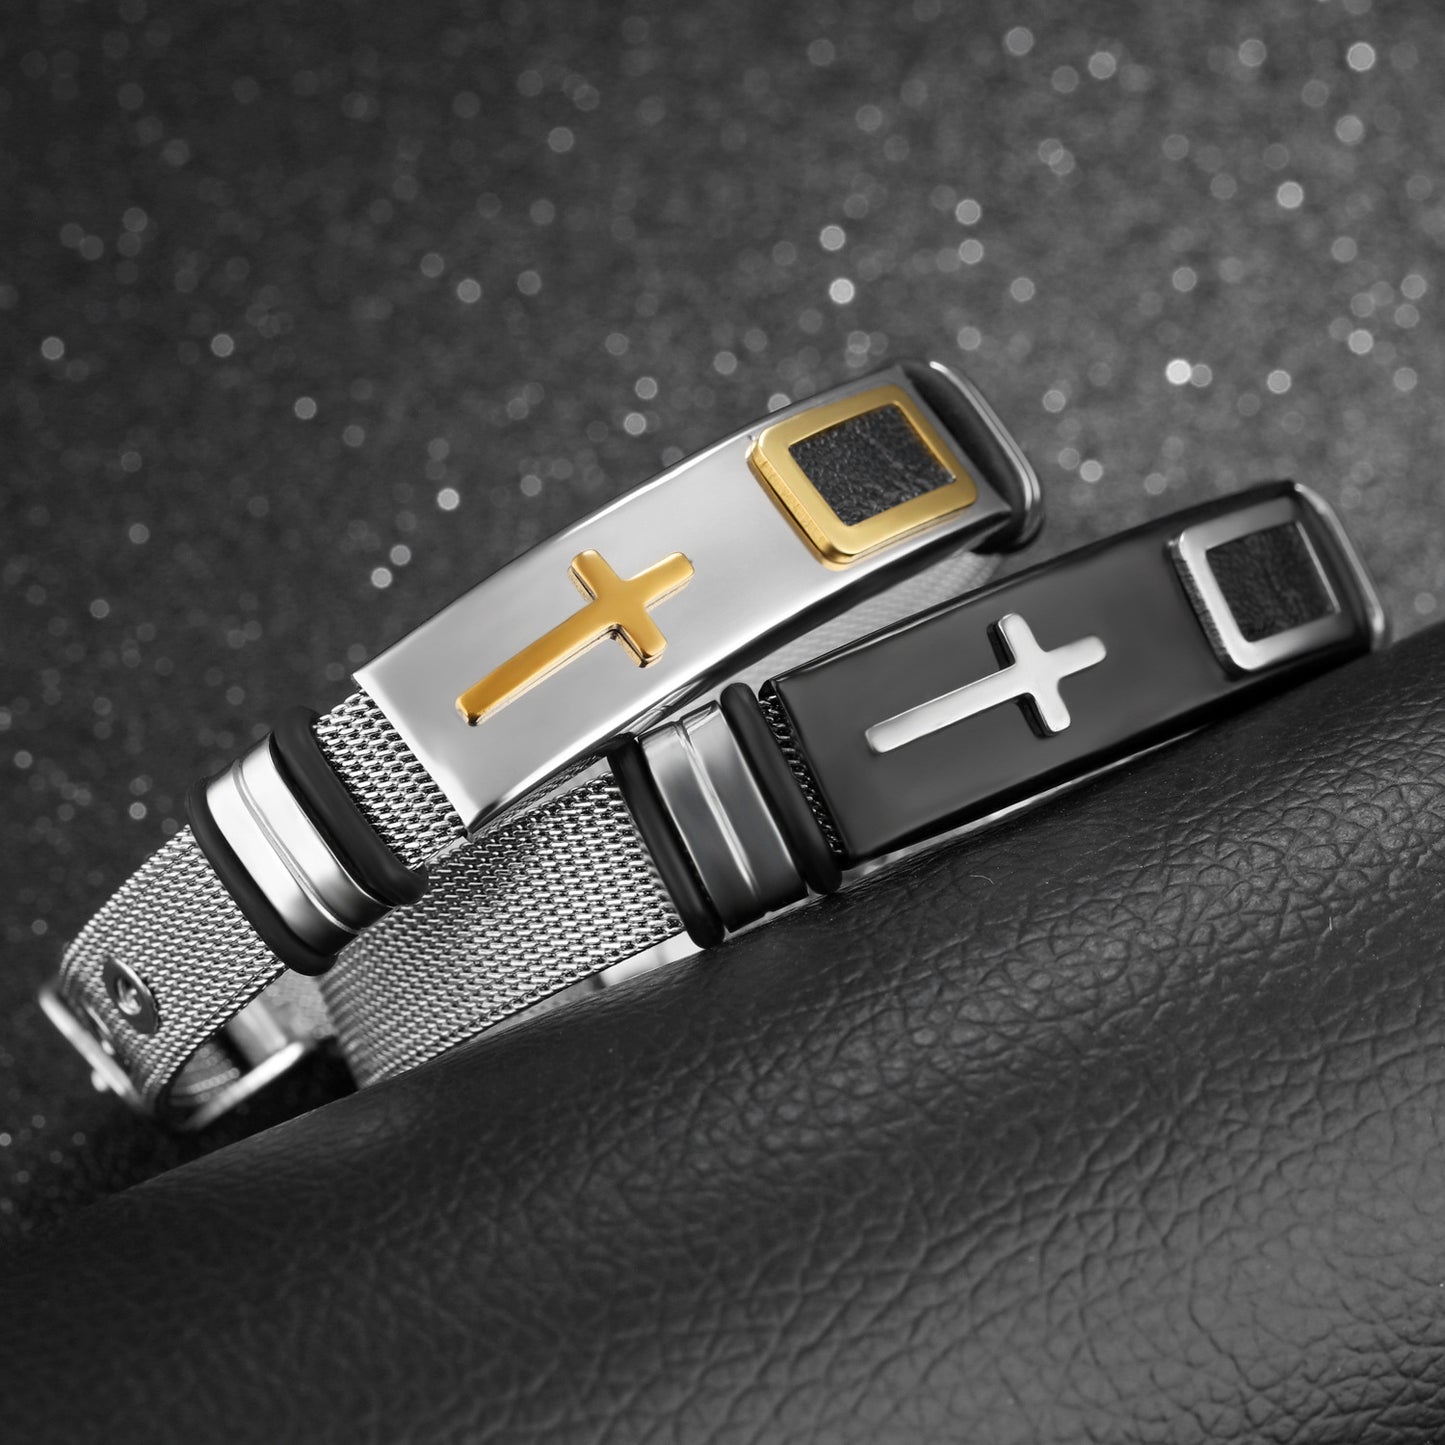 Steel mesh bracelet bracelet Bracelet gold cross titanium steel men's personality bracelet